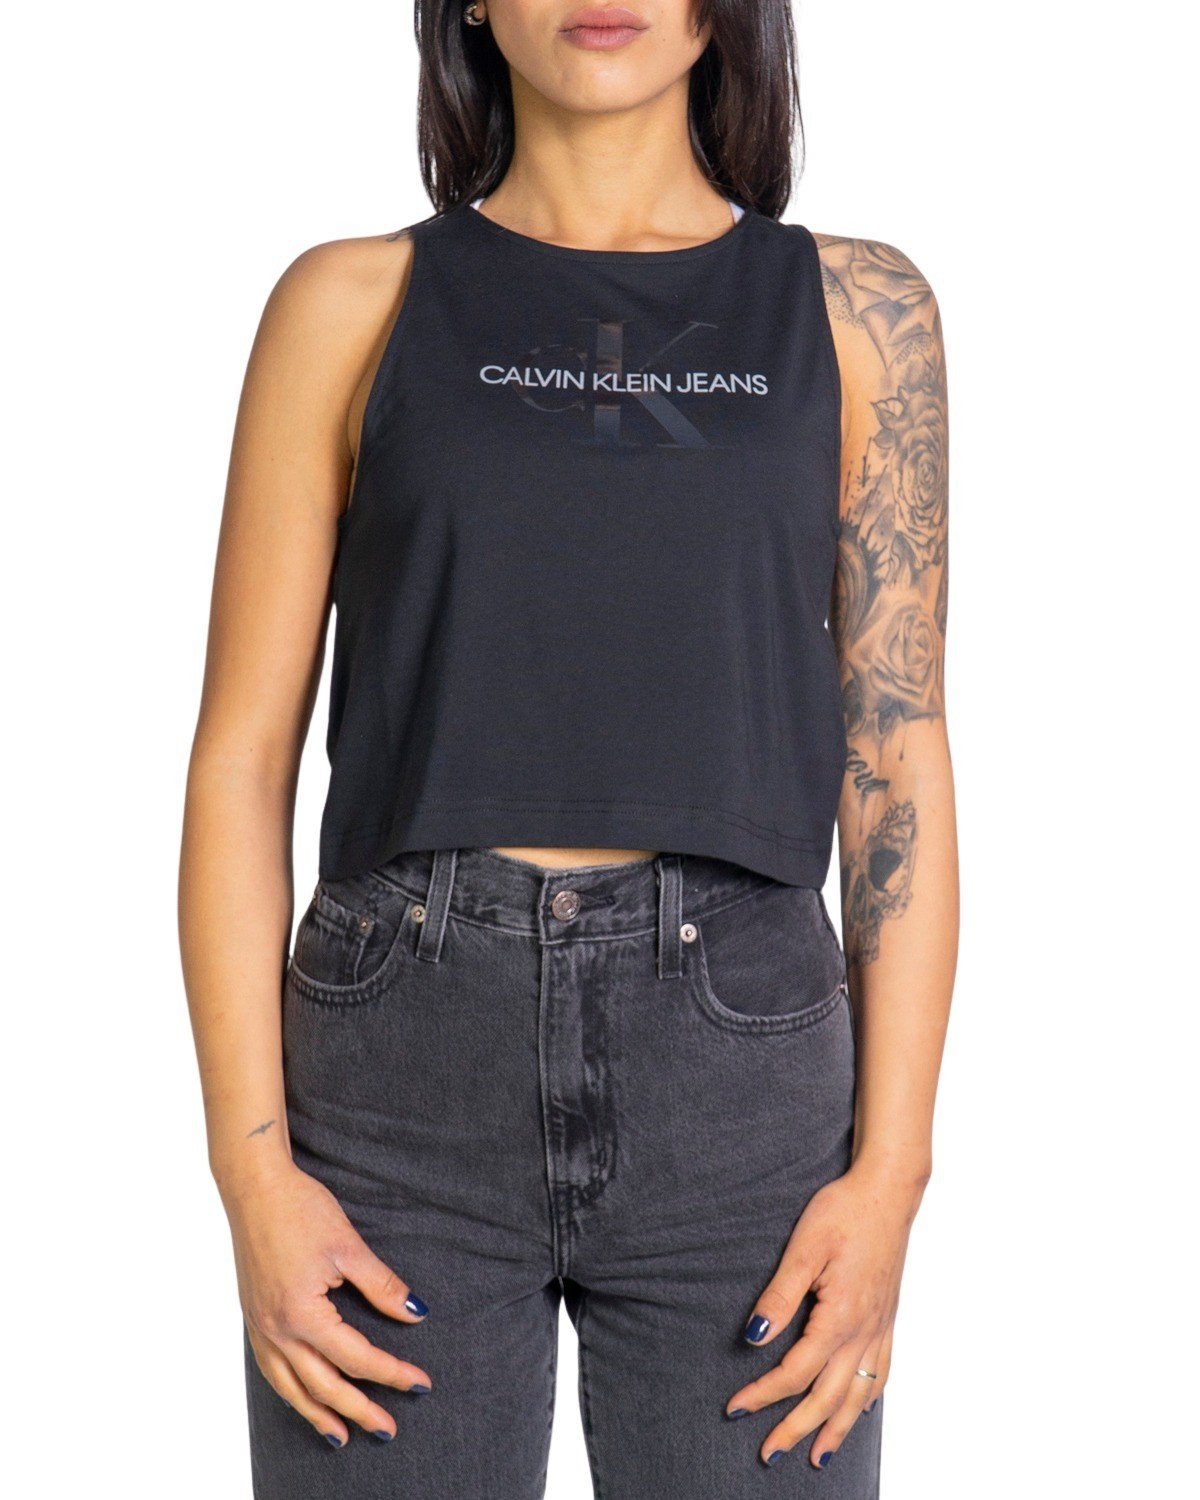 Calvin Klein Jeans Women's Tank Top Various Colours 299825 - black XS